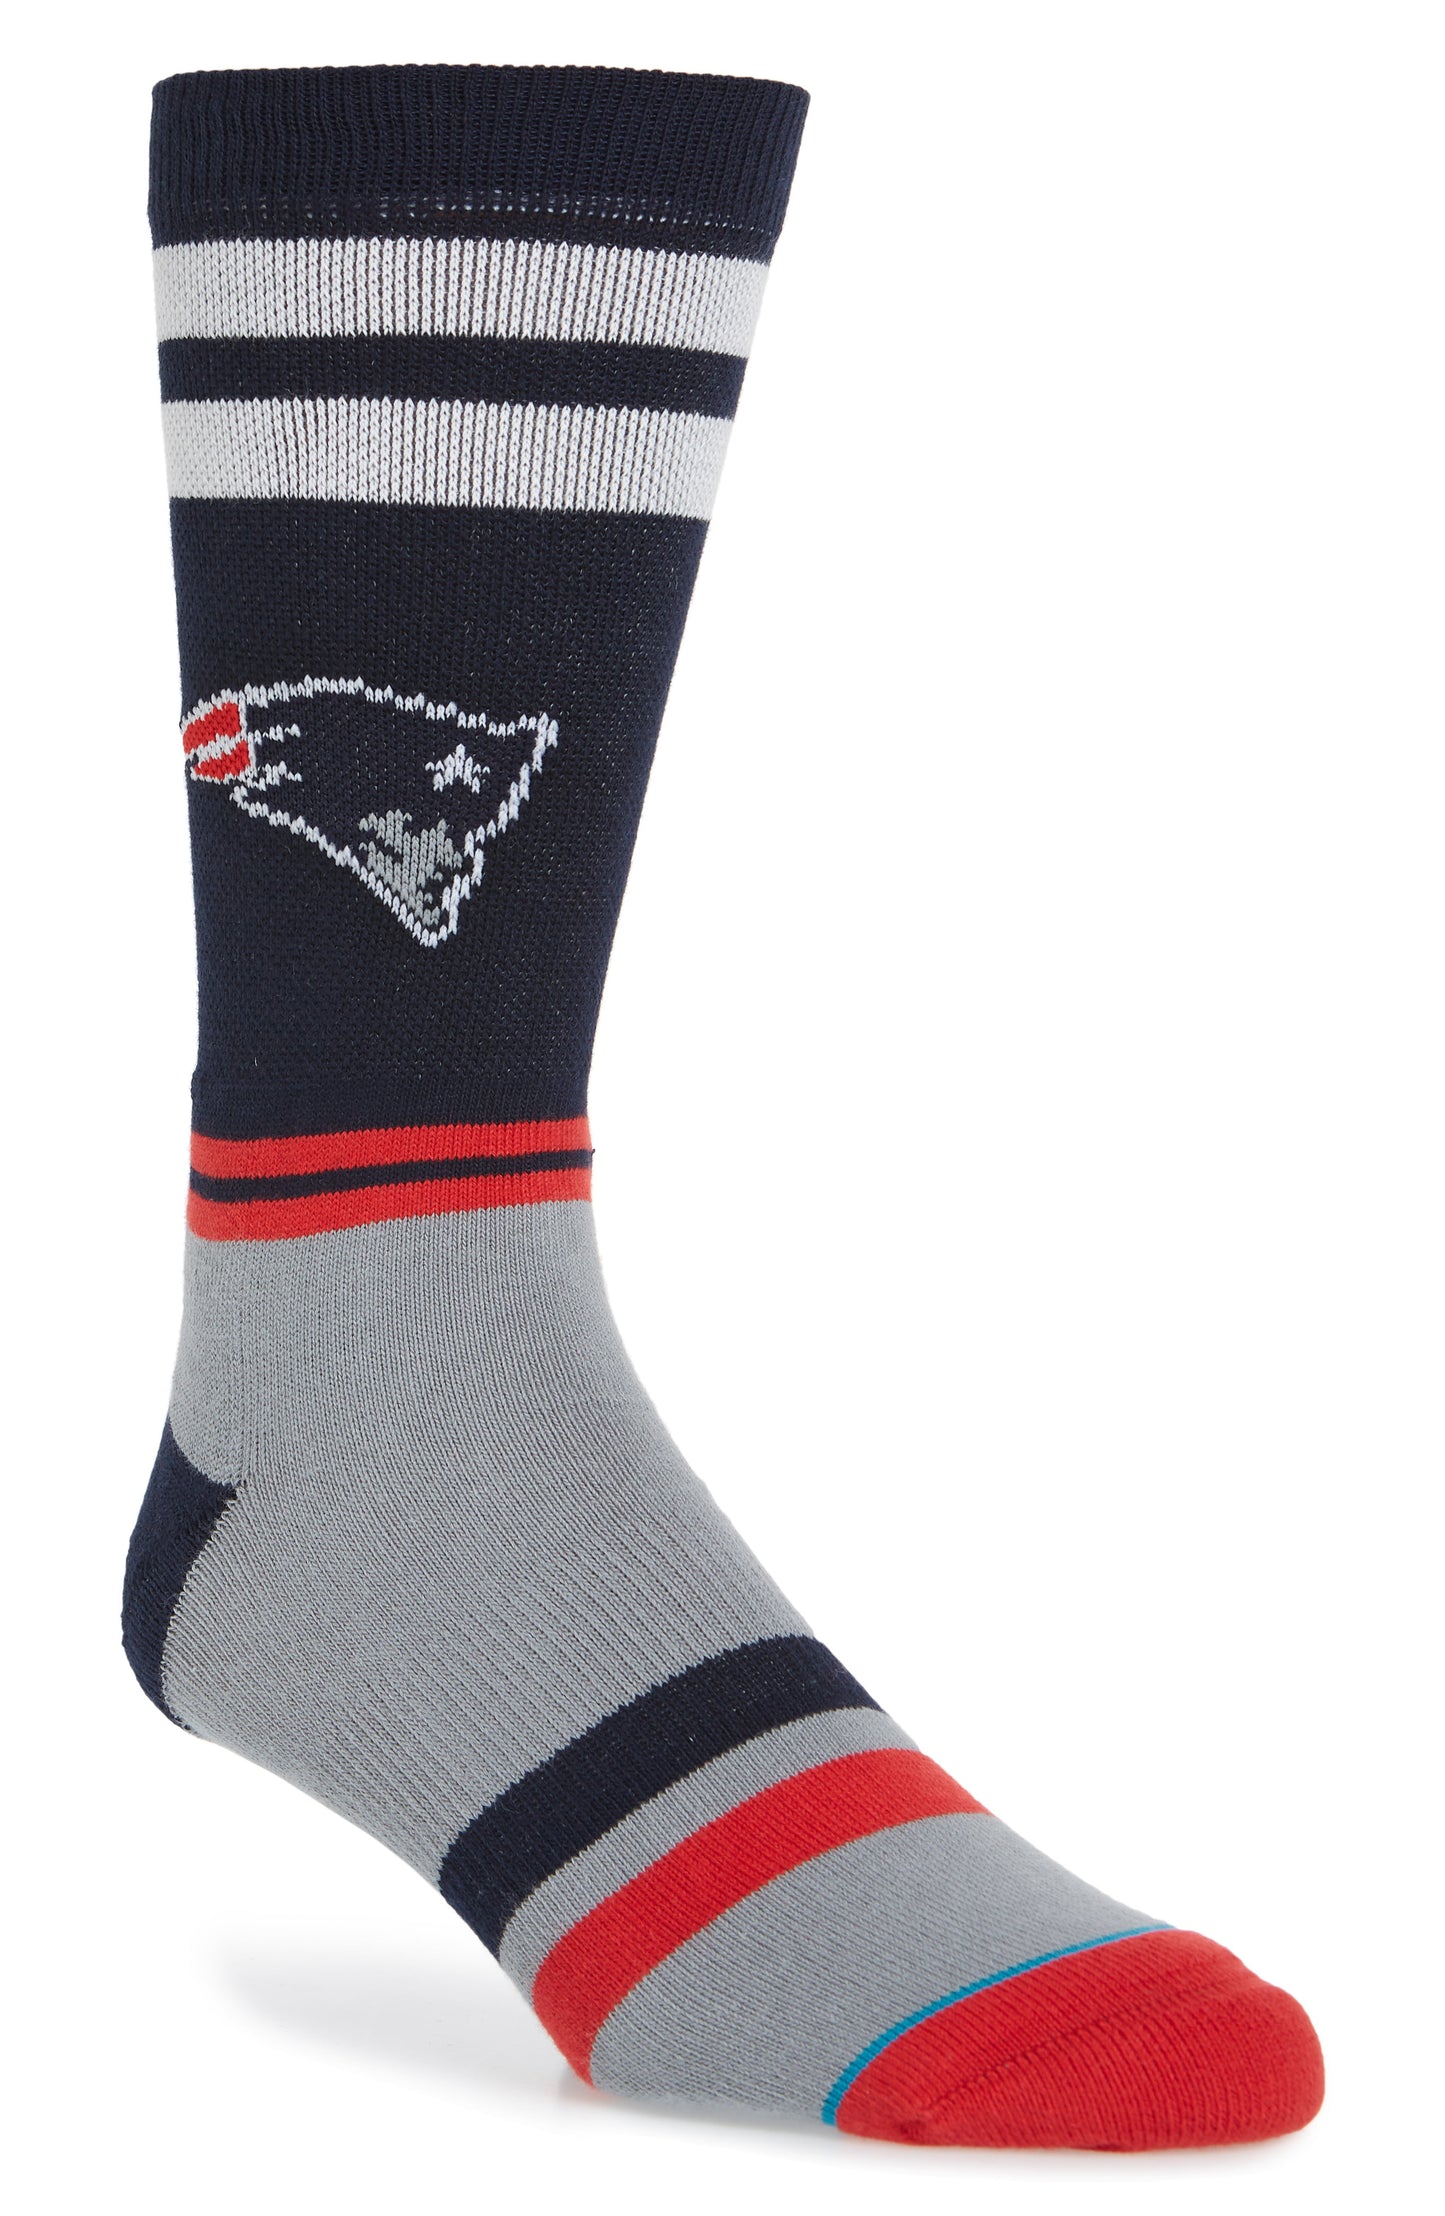 Stance Men's New England Patriots Socks Blue